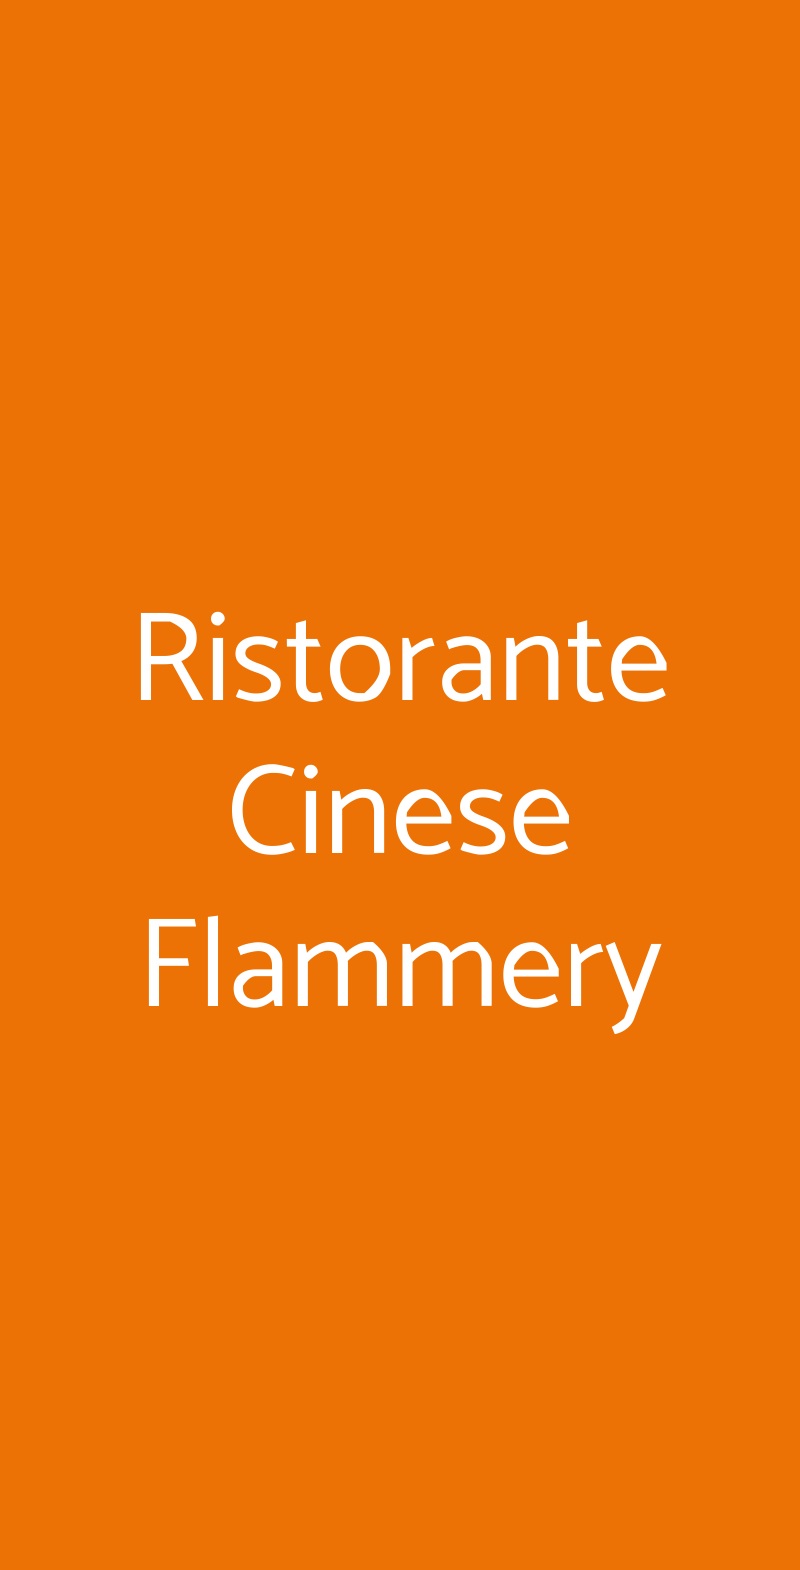 Ristorante Cinese Flammery Milano menù 1 pagina